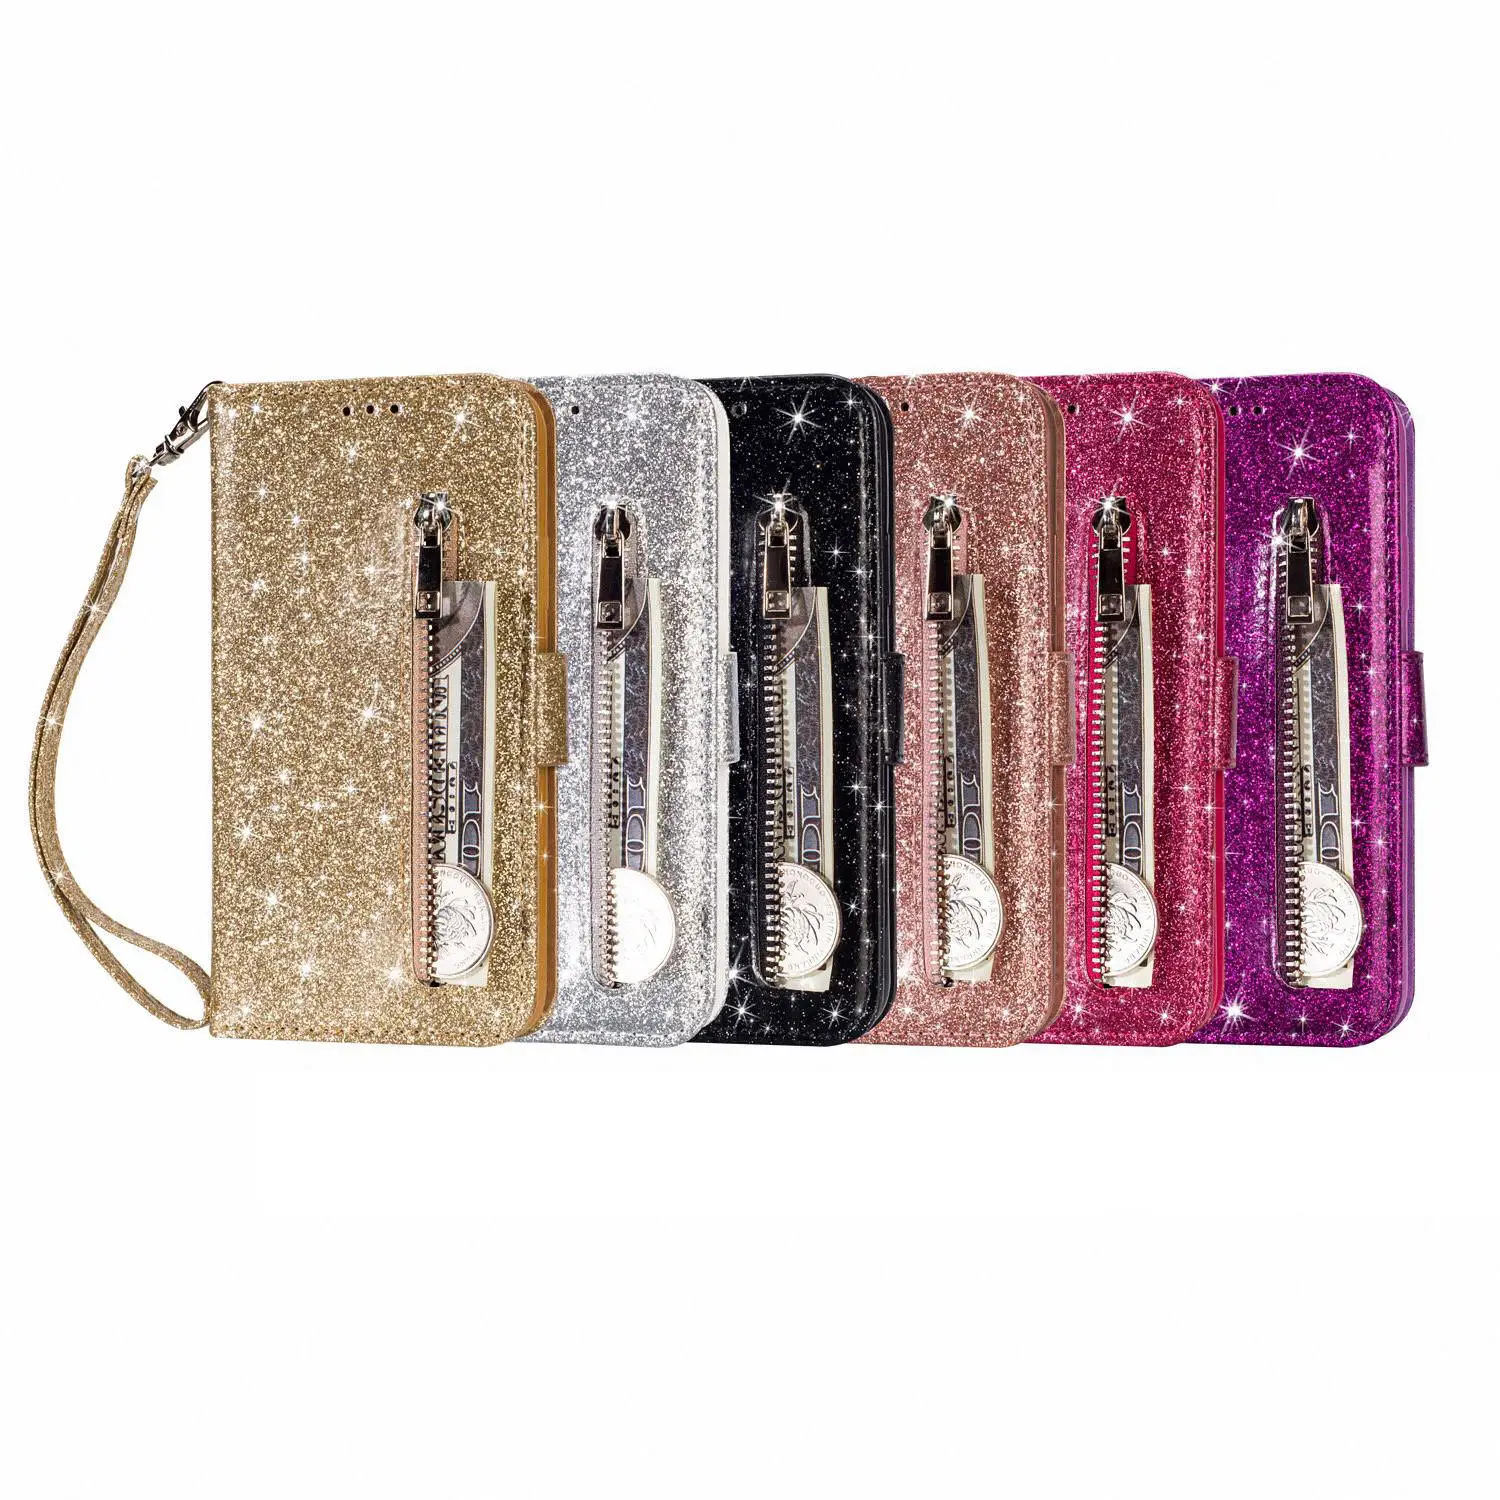 HTB1tIc2c8Kw3KVjSZFOq6yrDVXap Bling Glitter Case For Samsung Galaxy S10e Note 8 9 S10 Plus S9 S8 Plus S7 Edge S6 Leather Flip Stand Zipper Wallet Cover Coque